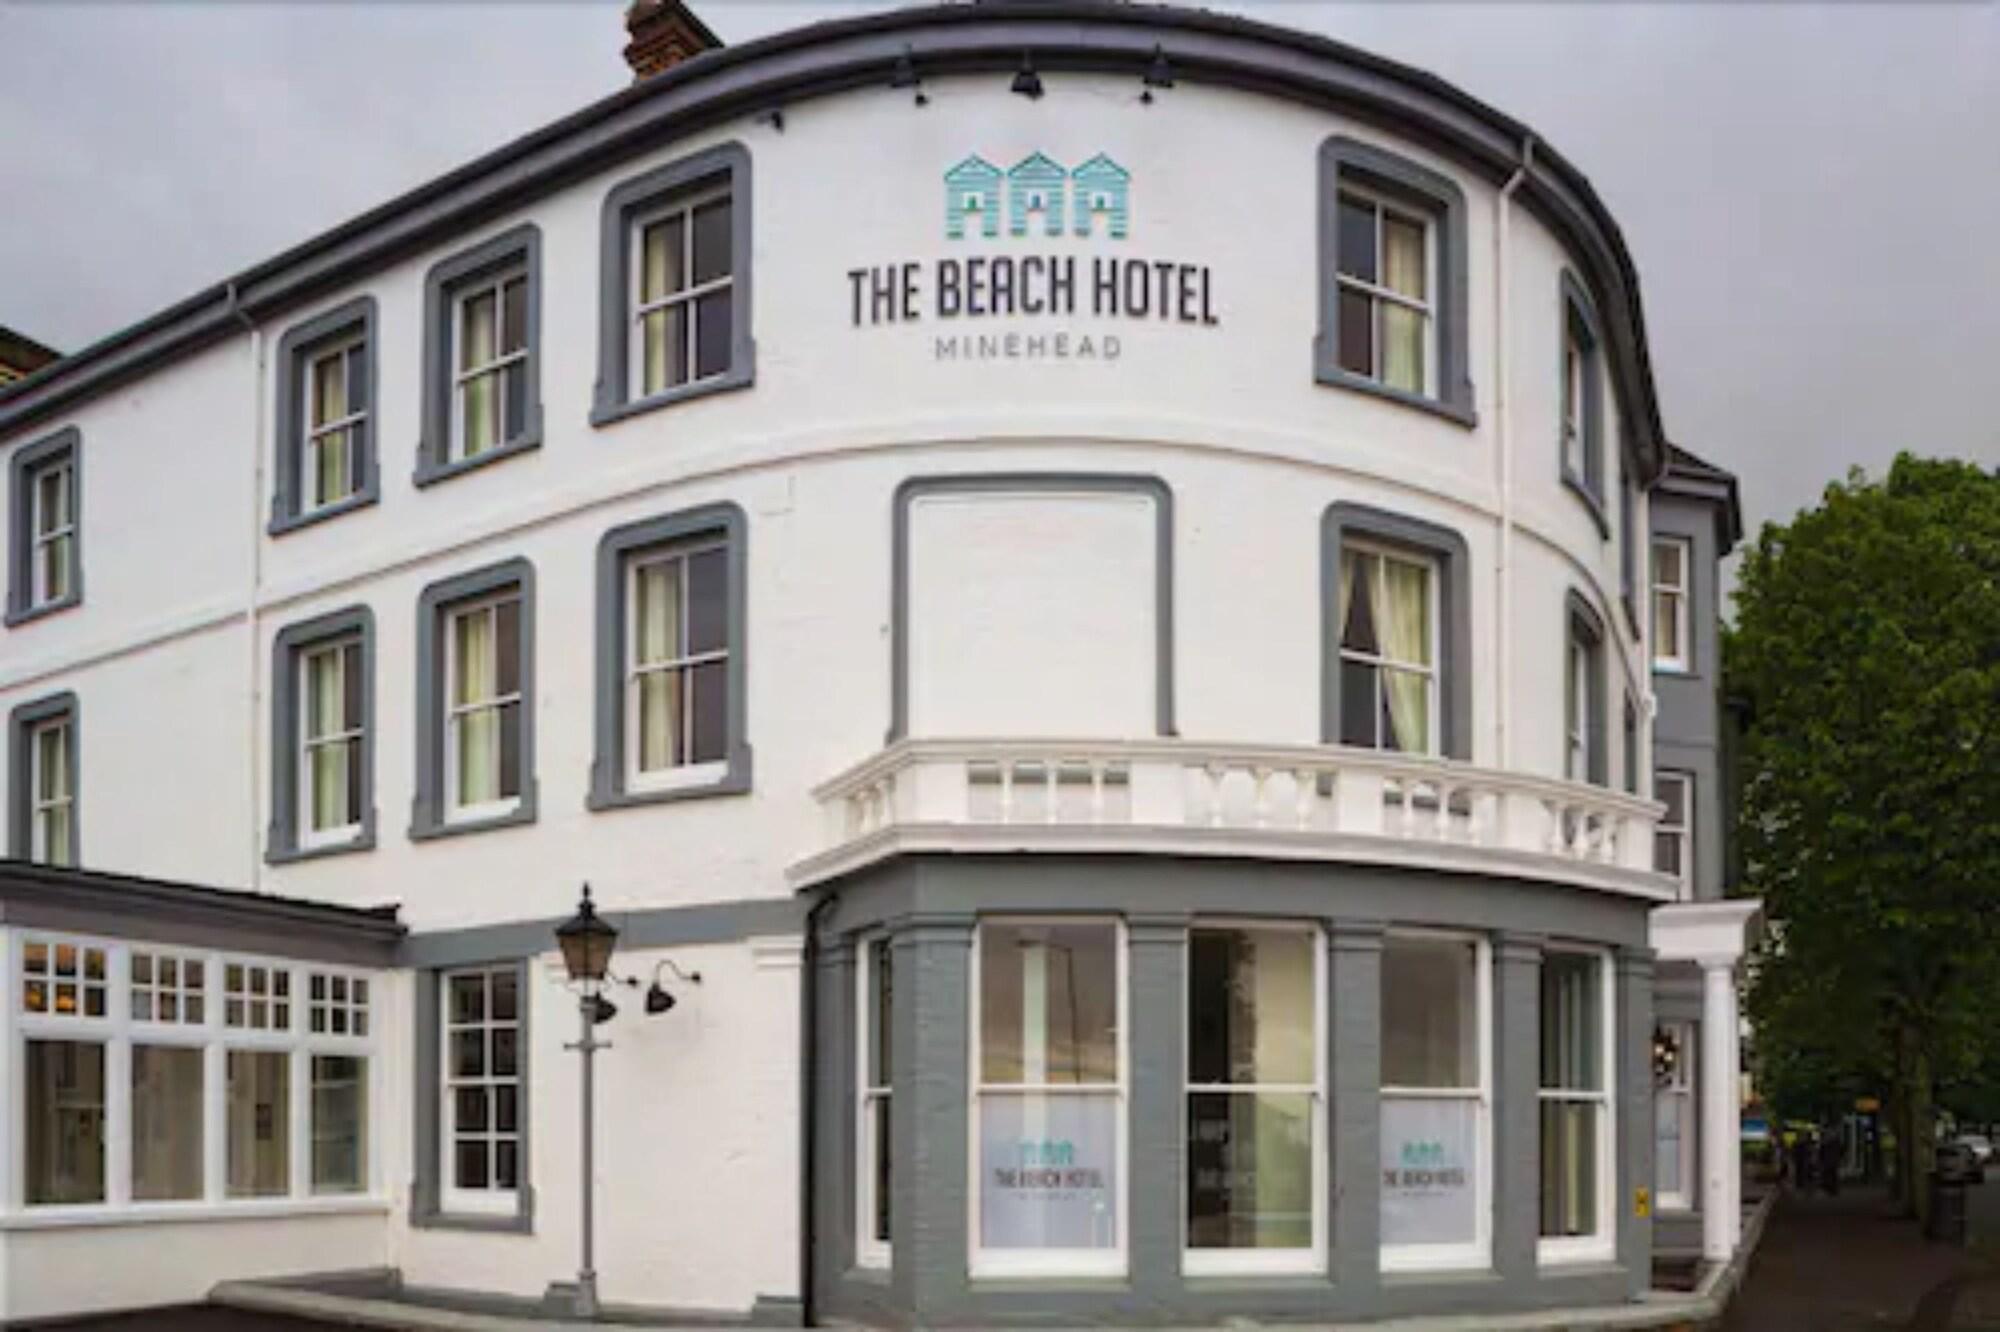 The Beach Hotel image